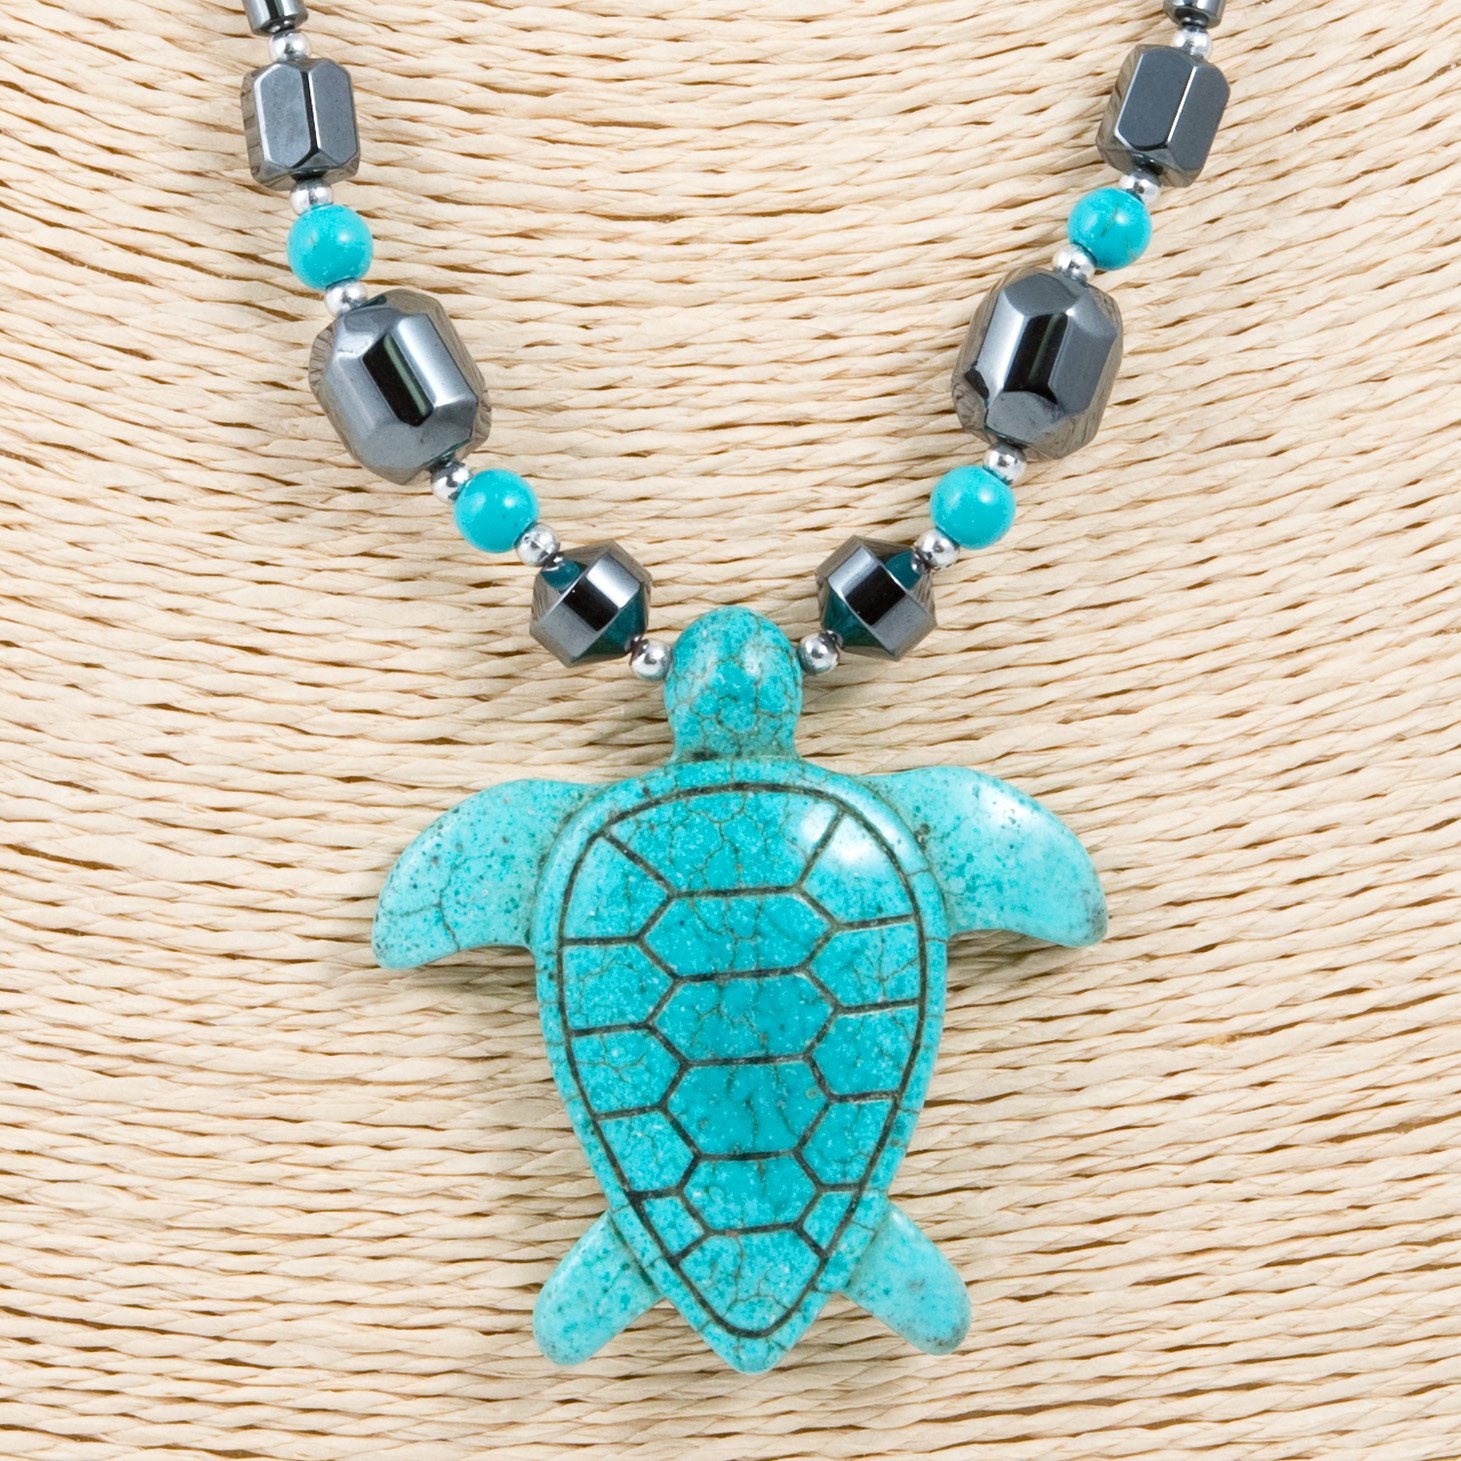 Turquoise Sea Turtle Pendant on Hematite Beads Necklace